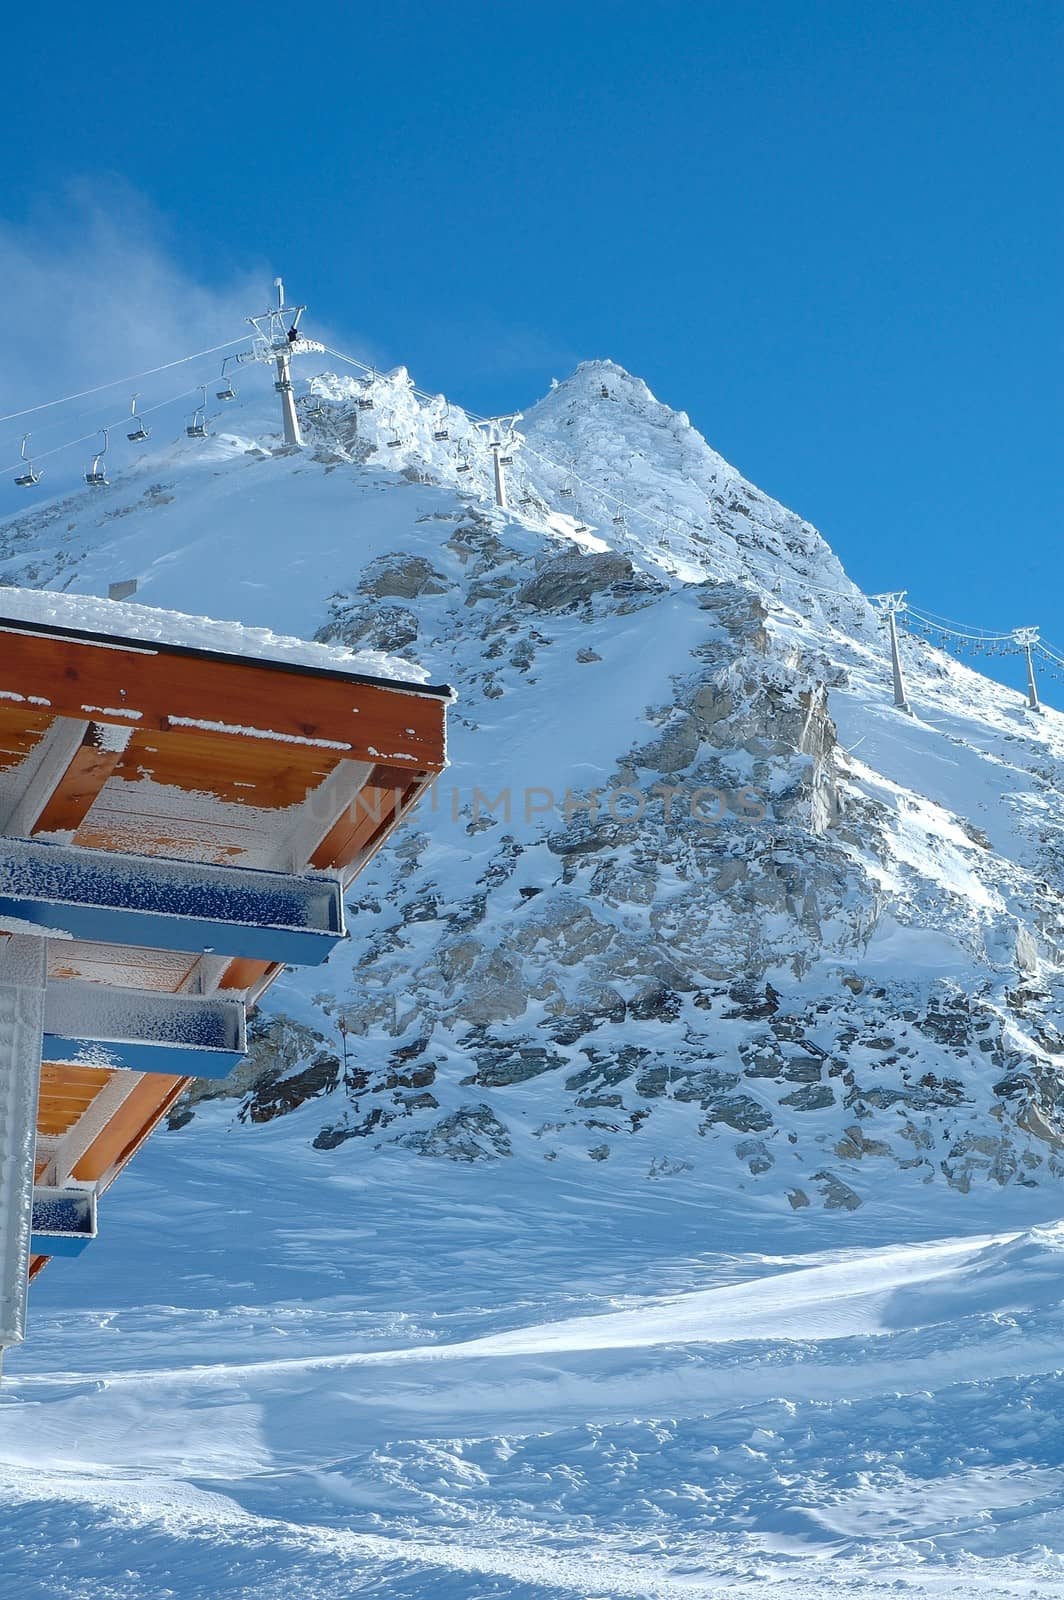 Peak, roof and ski lift by janhetman